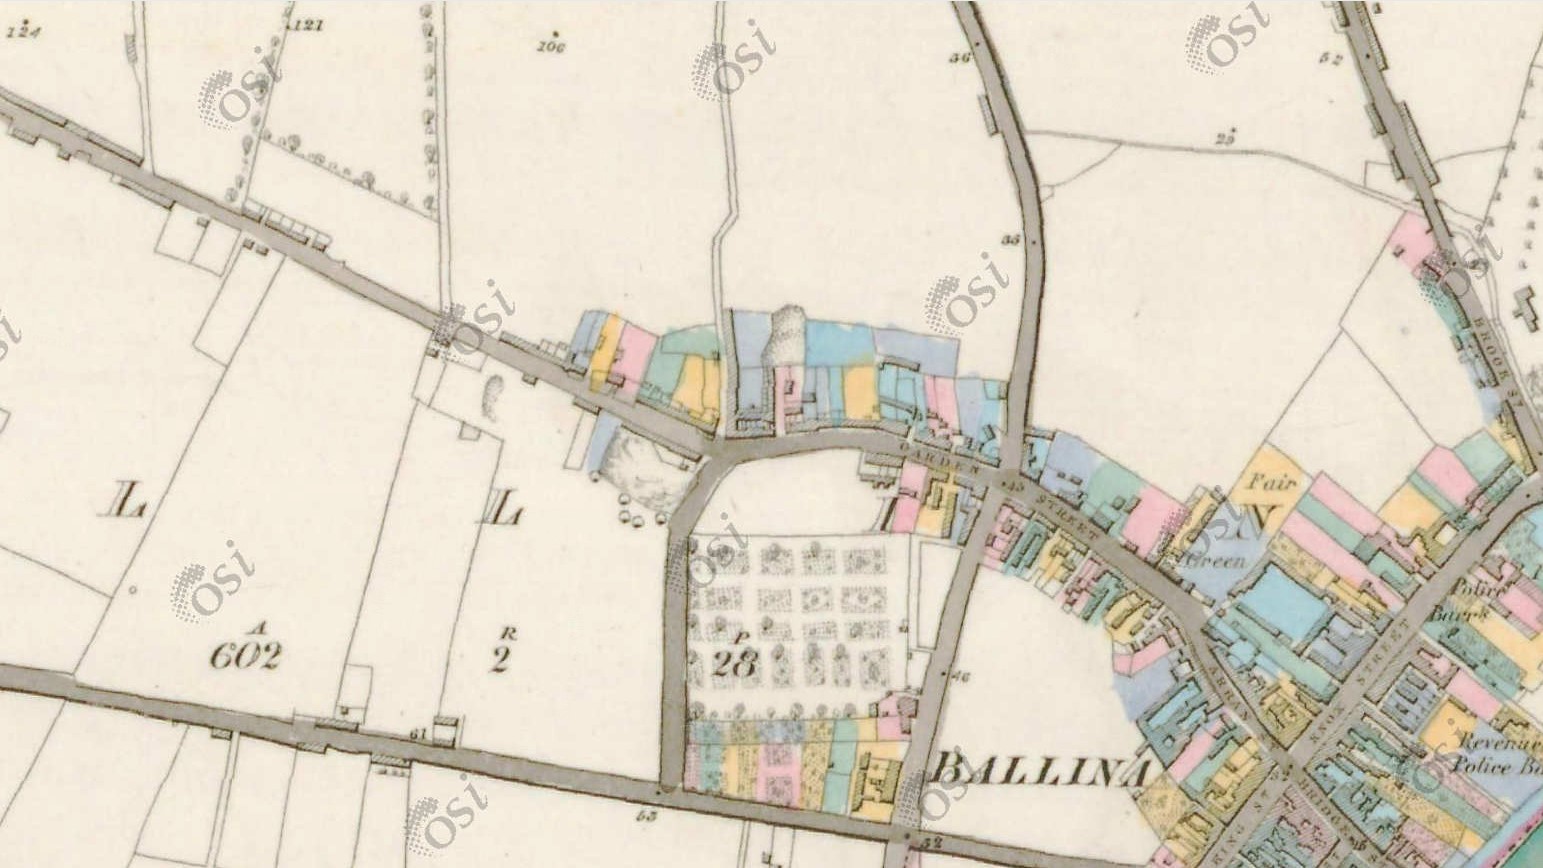 Ordnance Survey 6 inch to Mile map, Garden Street 1837